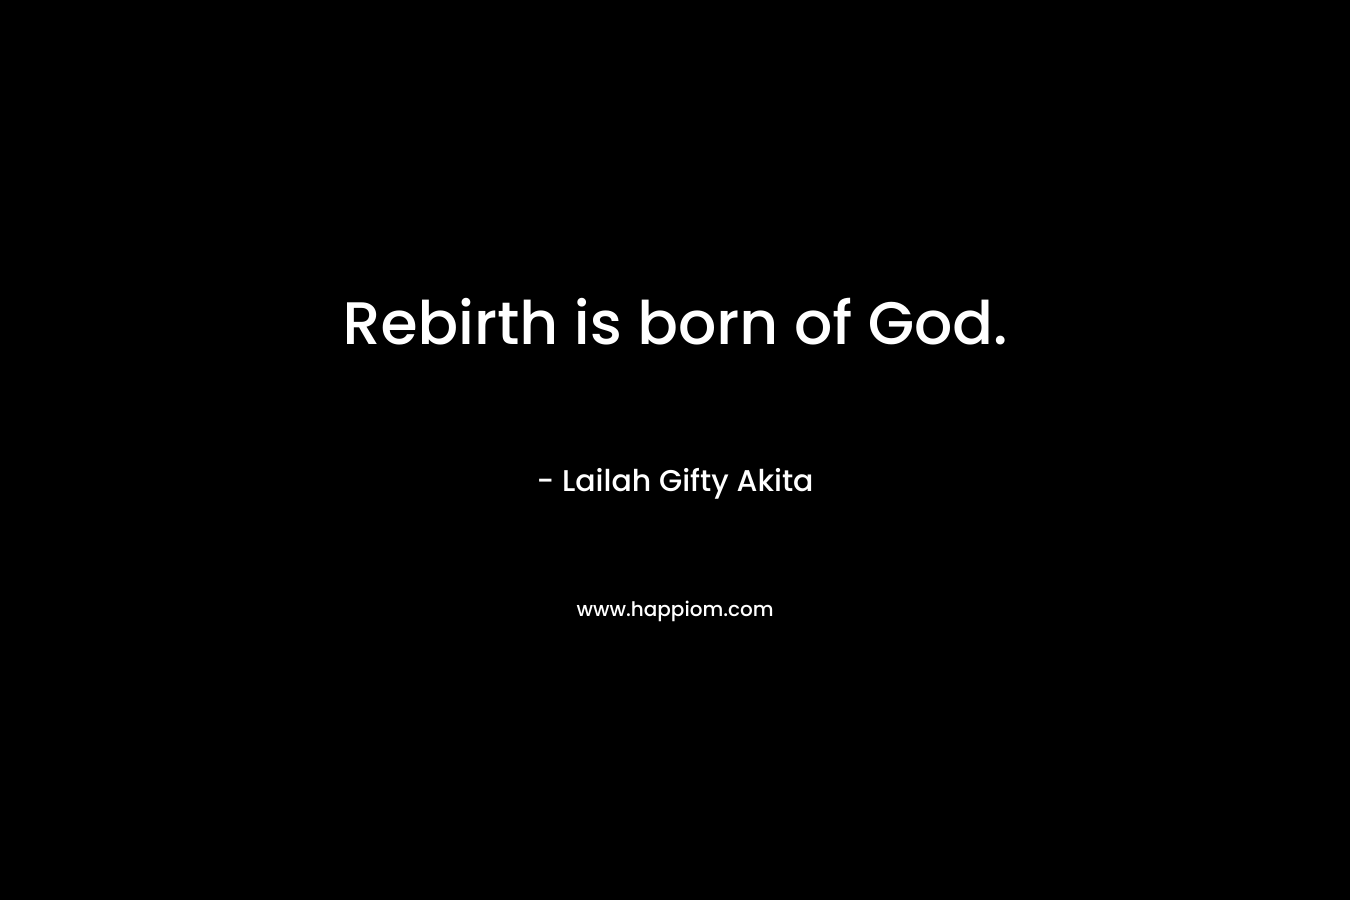 Rebirth is born of God.